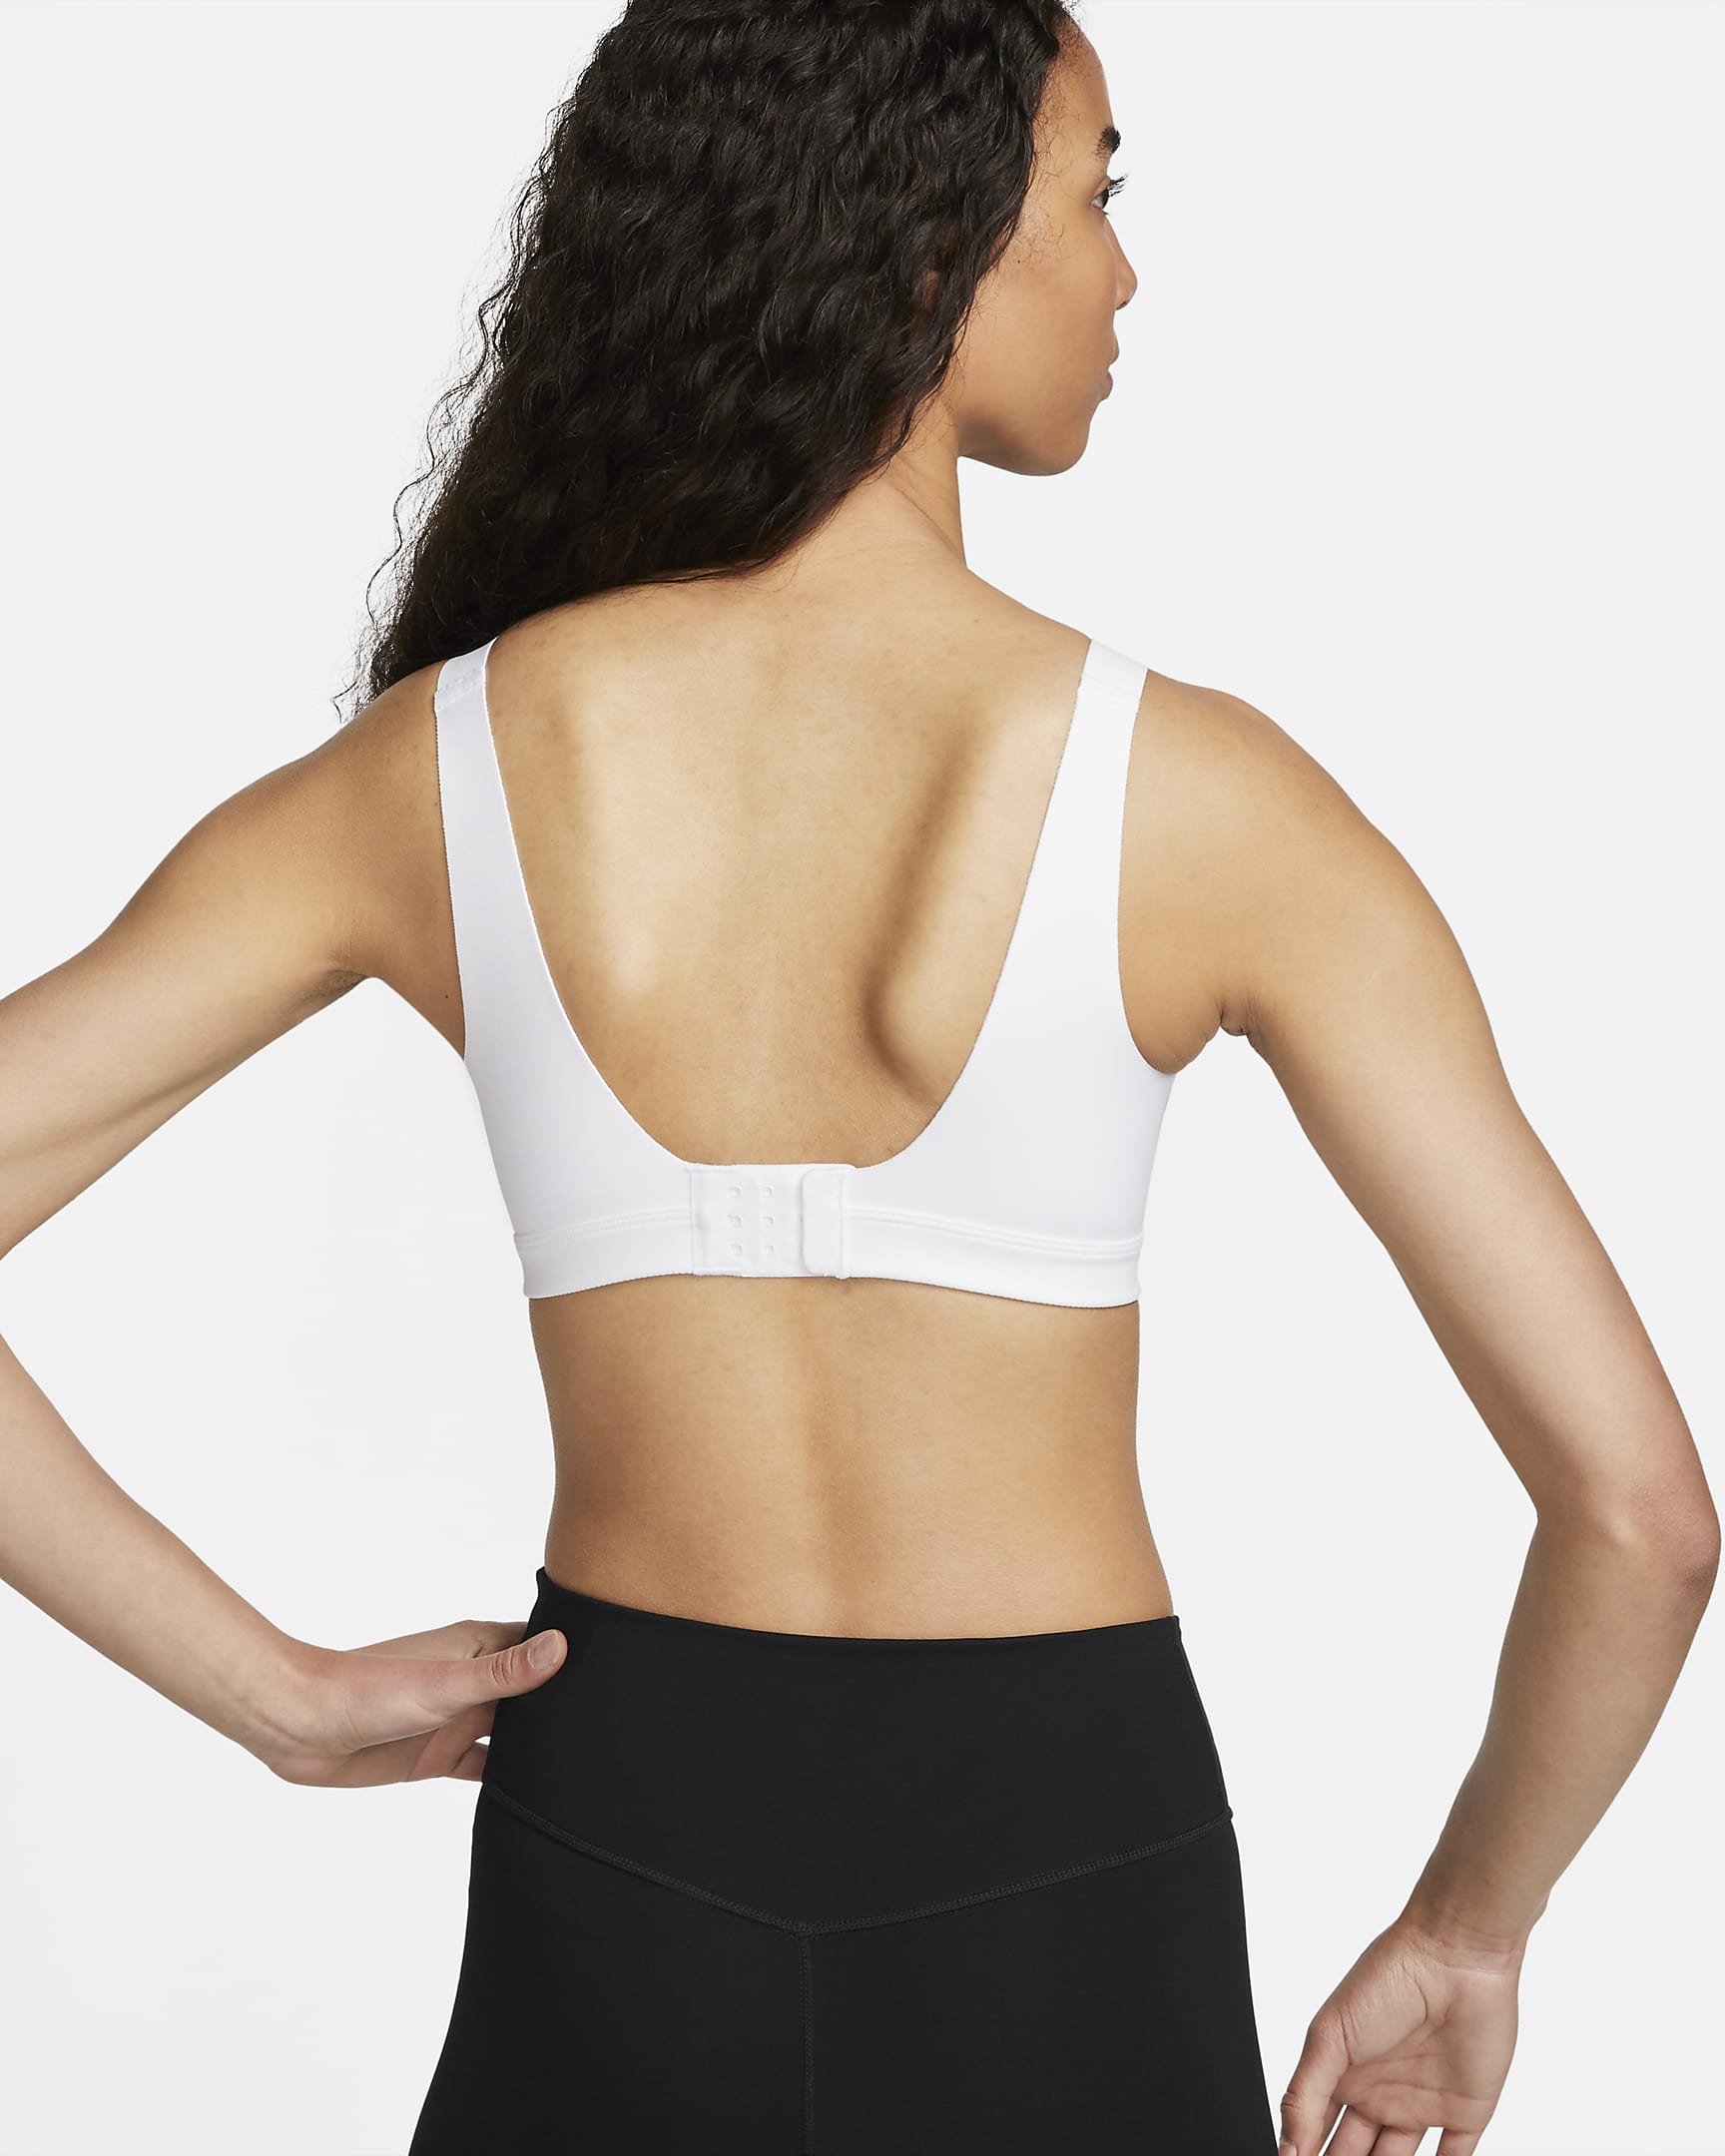 Nike Alpha Women's High-Support Padded Adjustable Sports Bra - White/White/Stone Mauve/Black